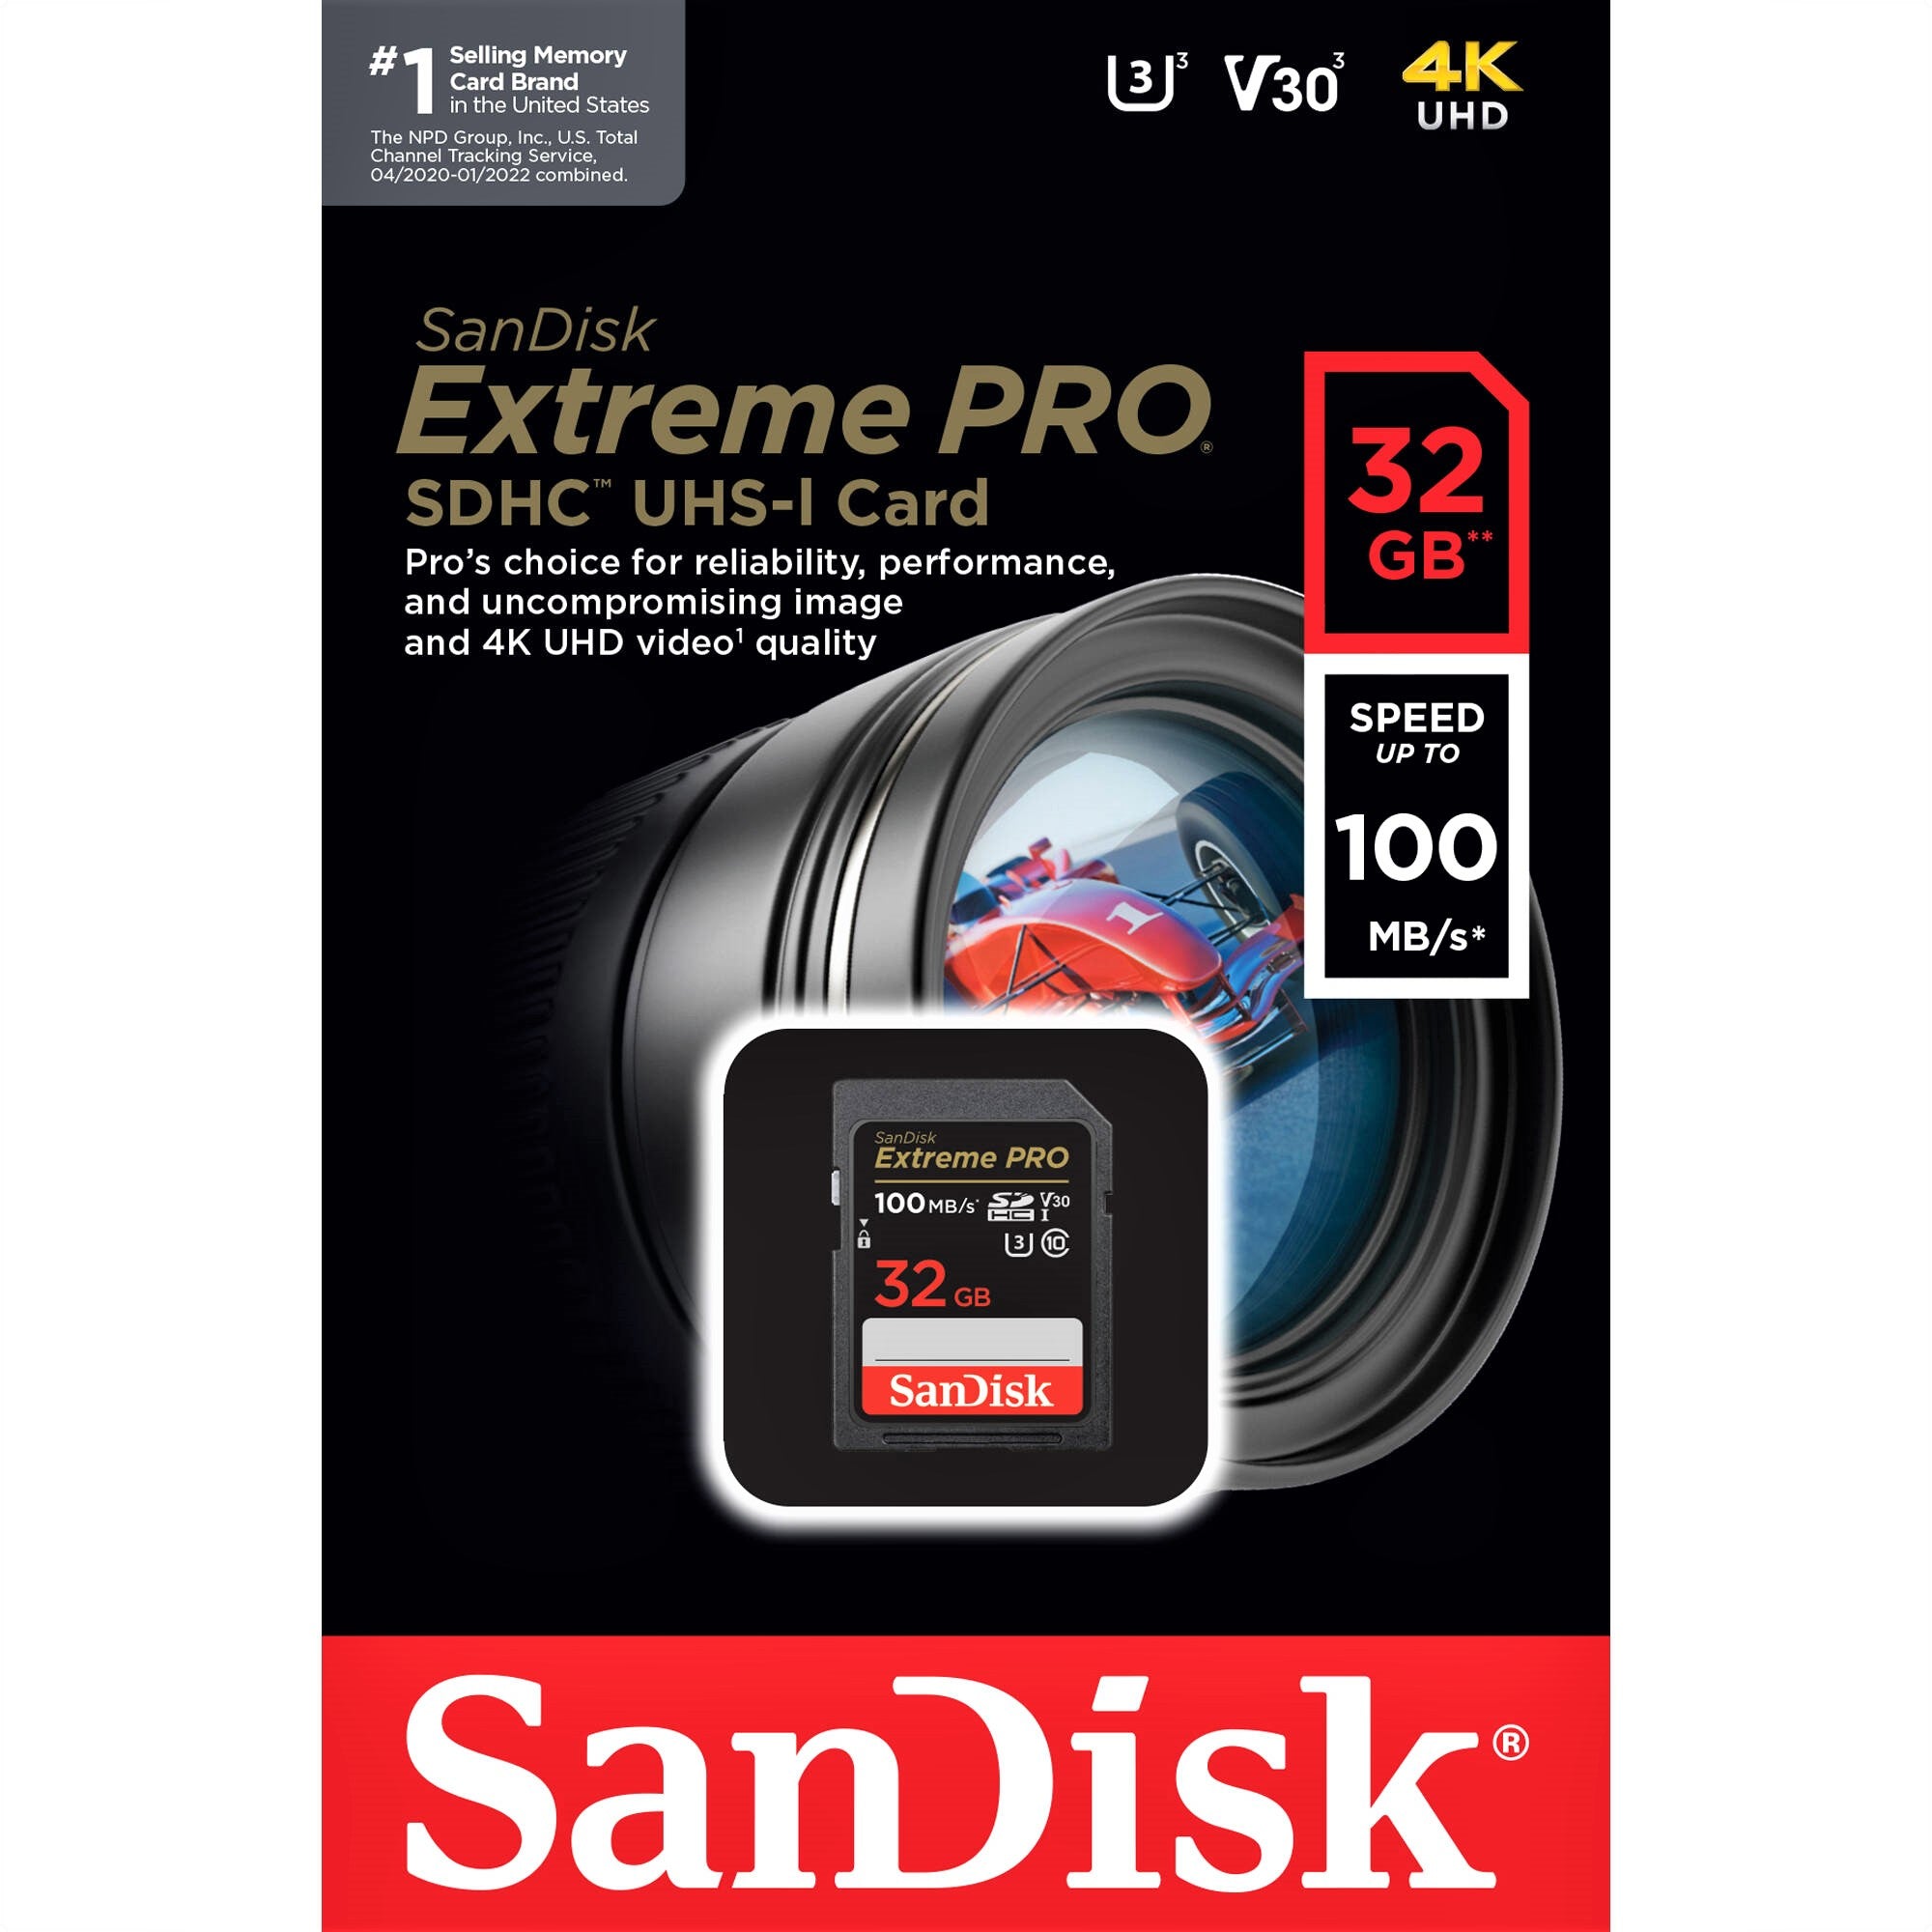 SanDisk 32GB Extreme PRO SDHC UHS-I Memory Card - C10, U3, V30, 4K UHD, SD Card - SDSDXXO-032G-GN4IN